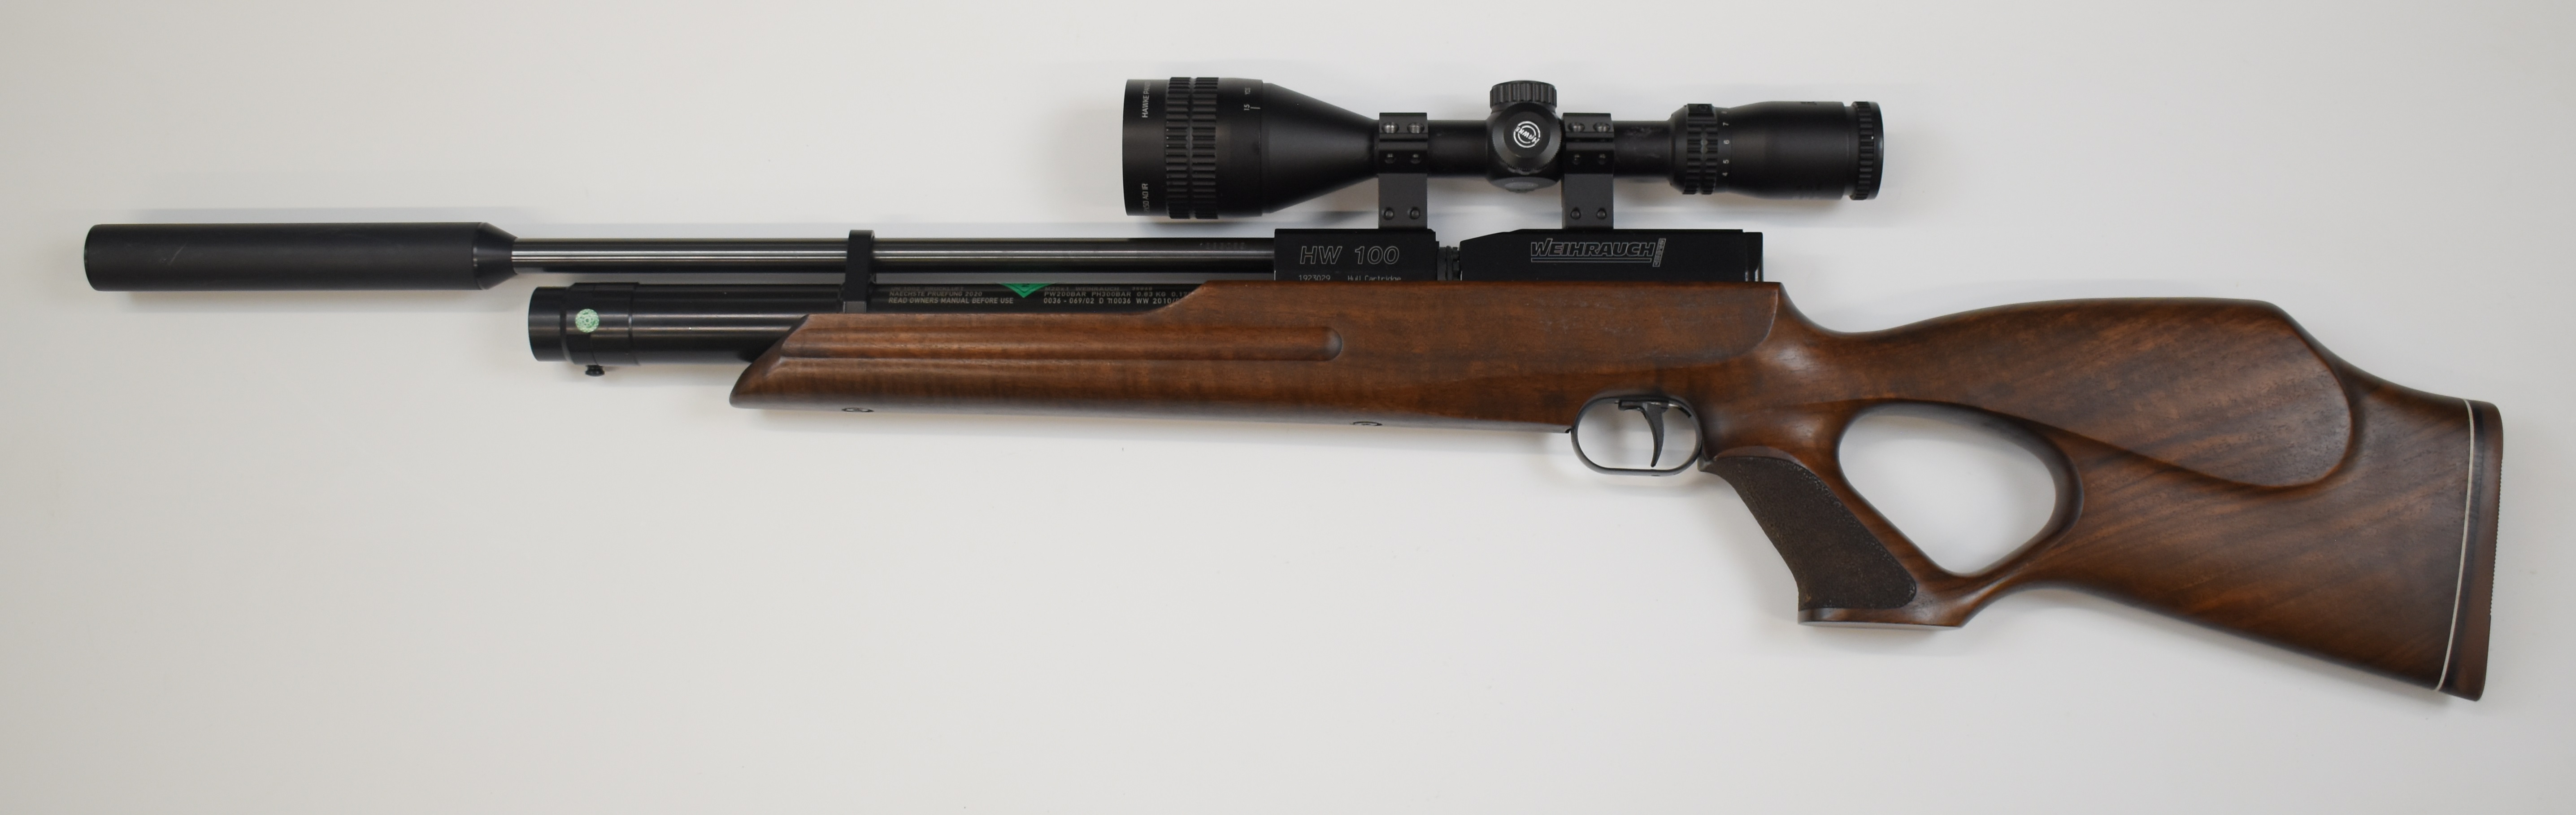 Weihrauch HW100 .177 PCP air rifle with textured semi-pistol grip, raised cheek piece, adjustable - Image 6 of 10